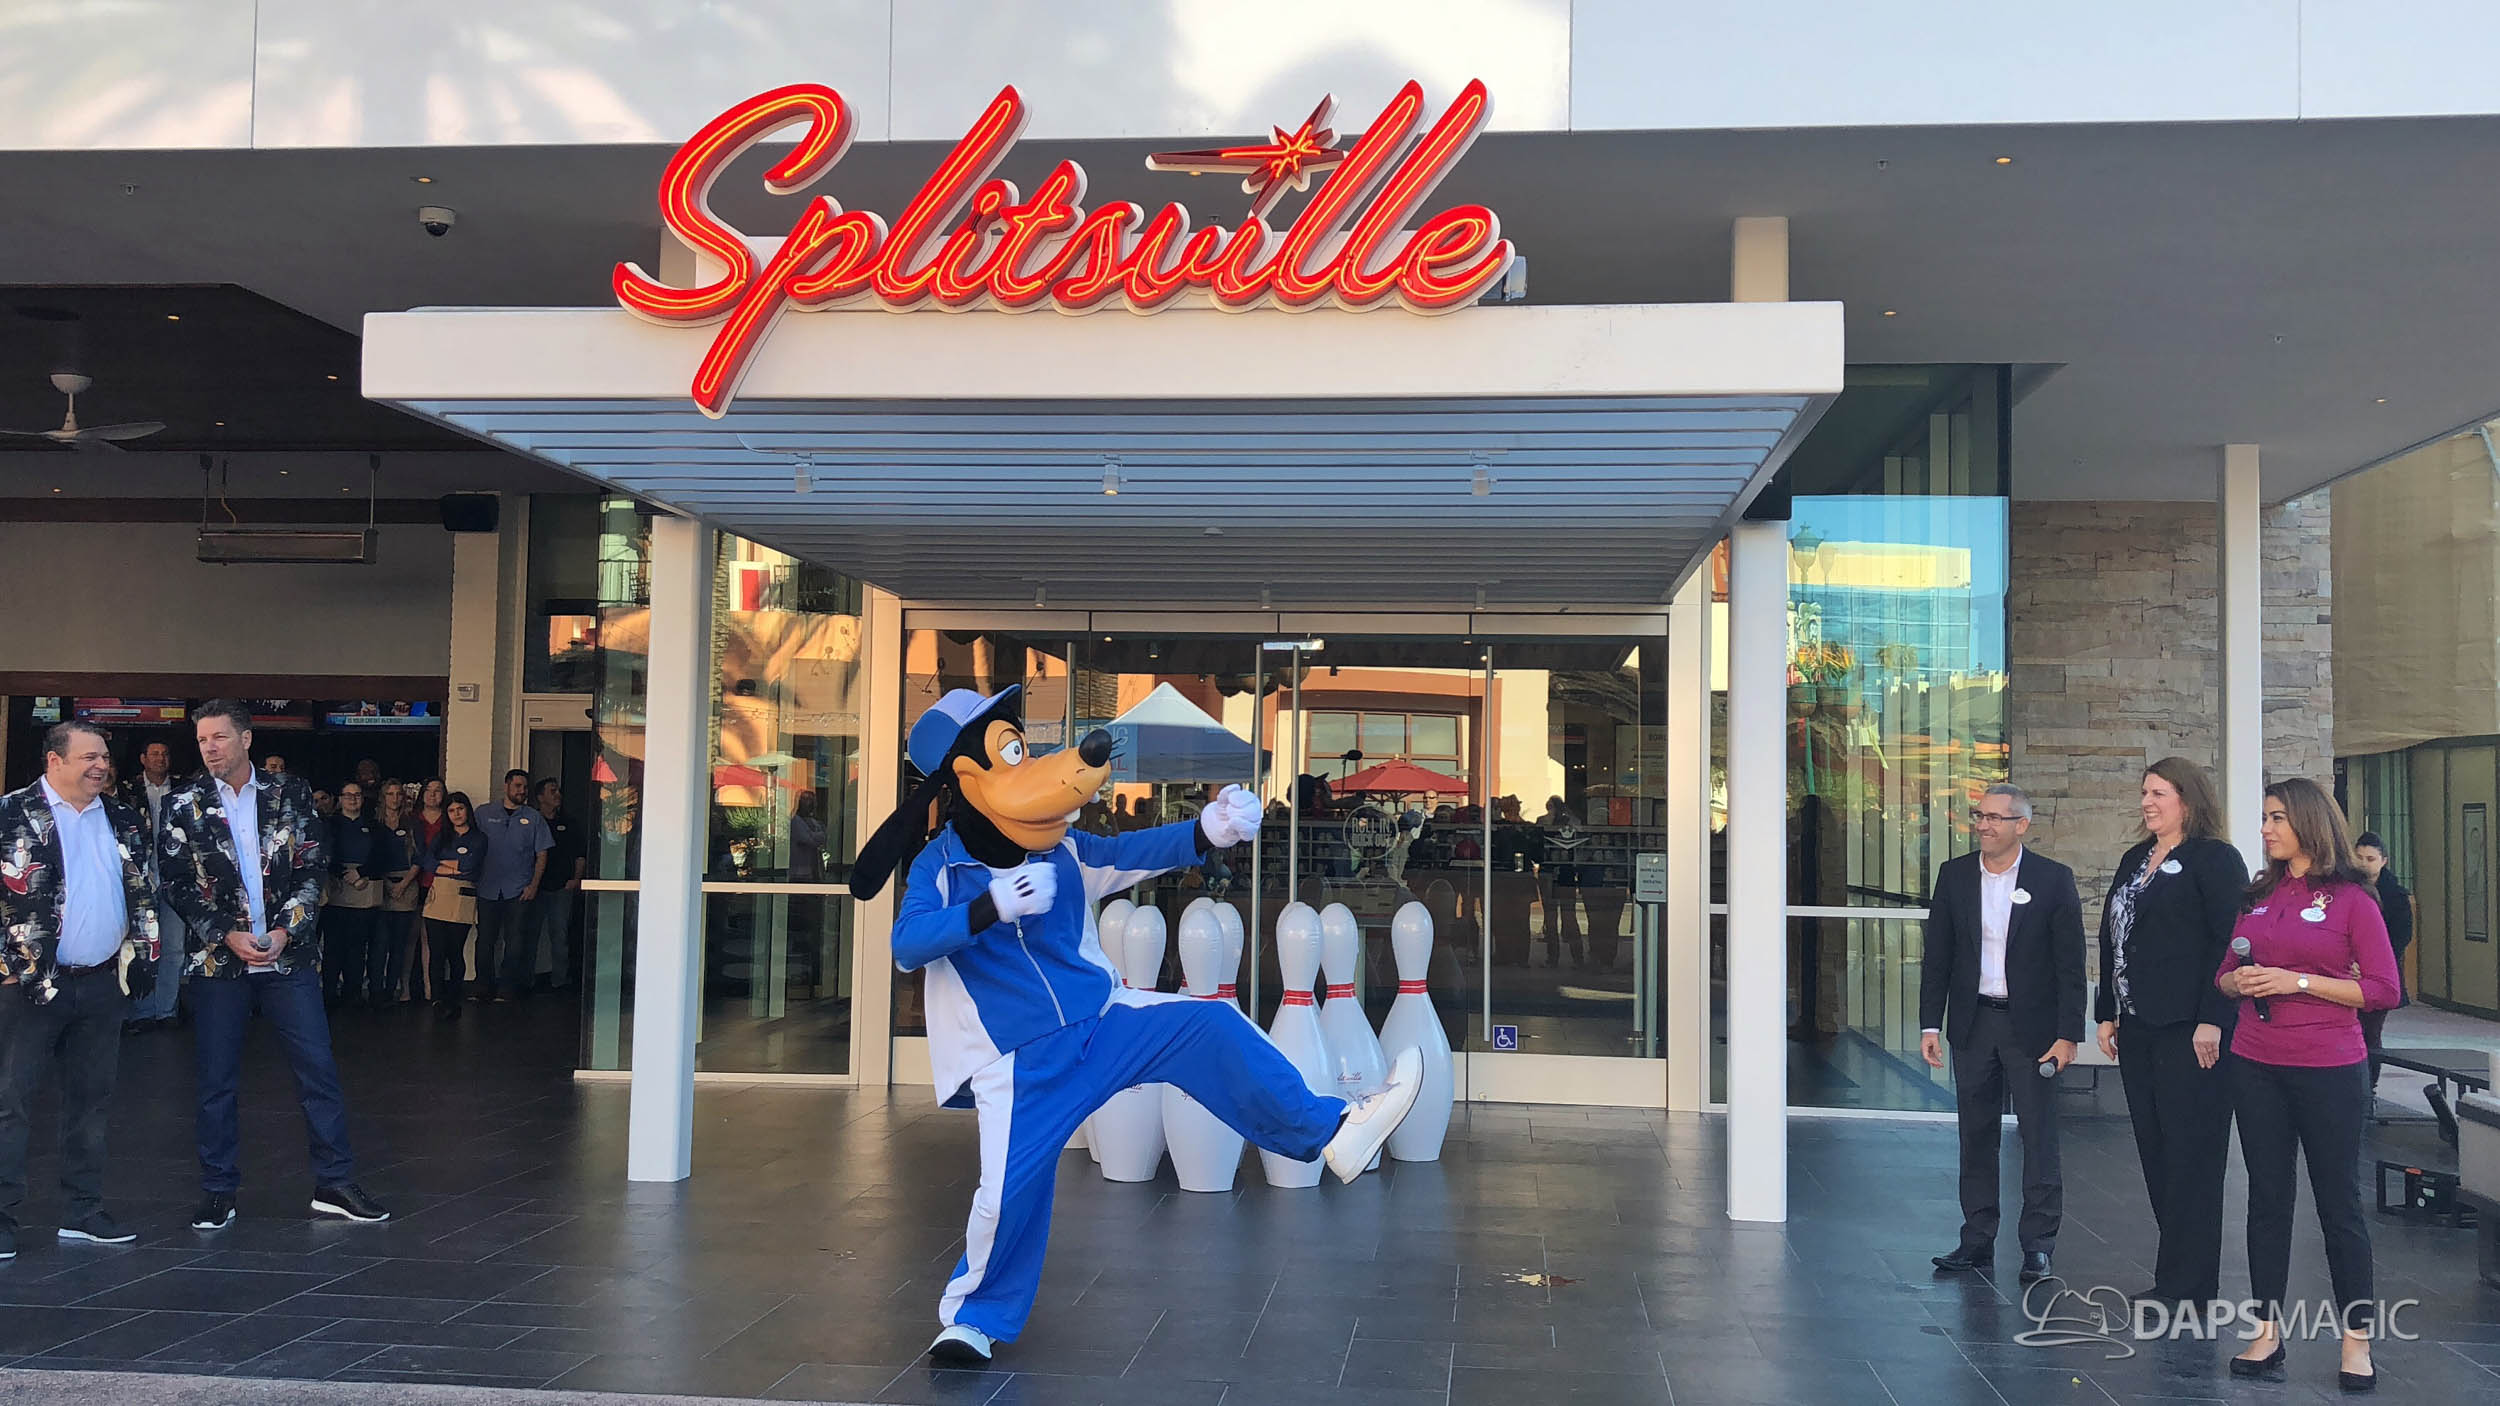 REVIEW: Splitsville Luxury Lanes Opens in Downtown Disney - WDW